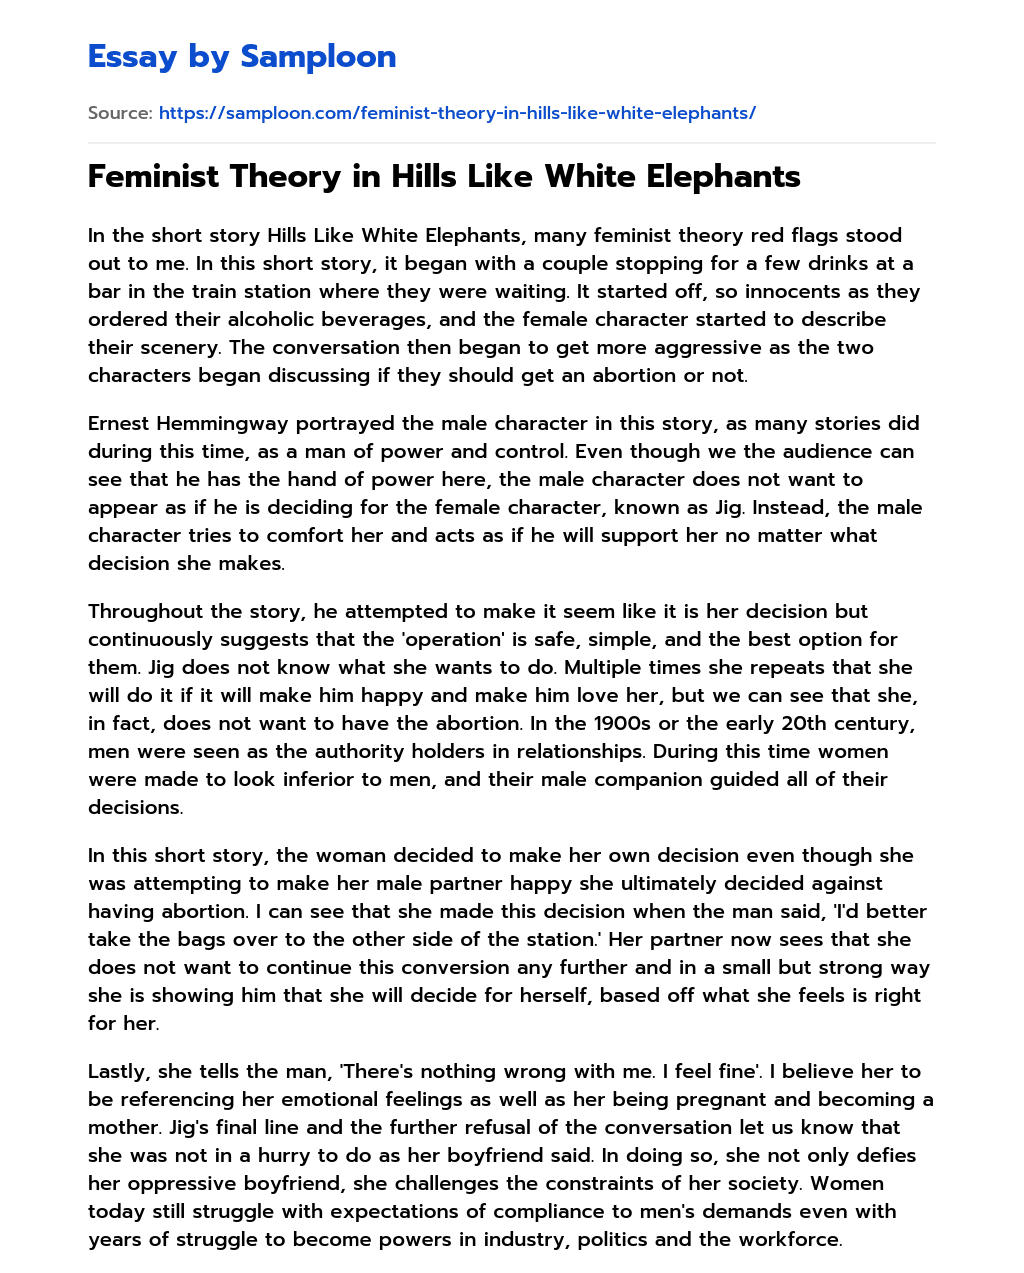 Feminist Theory in Hills Like White Elephants essay